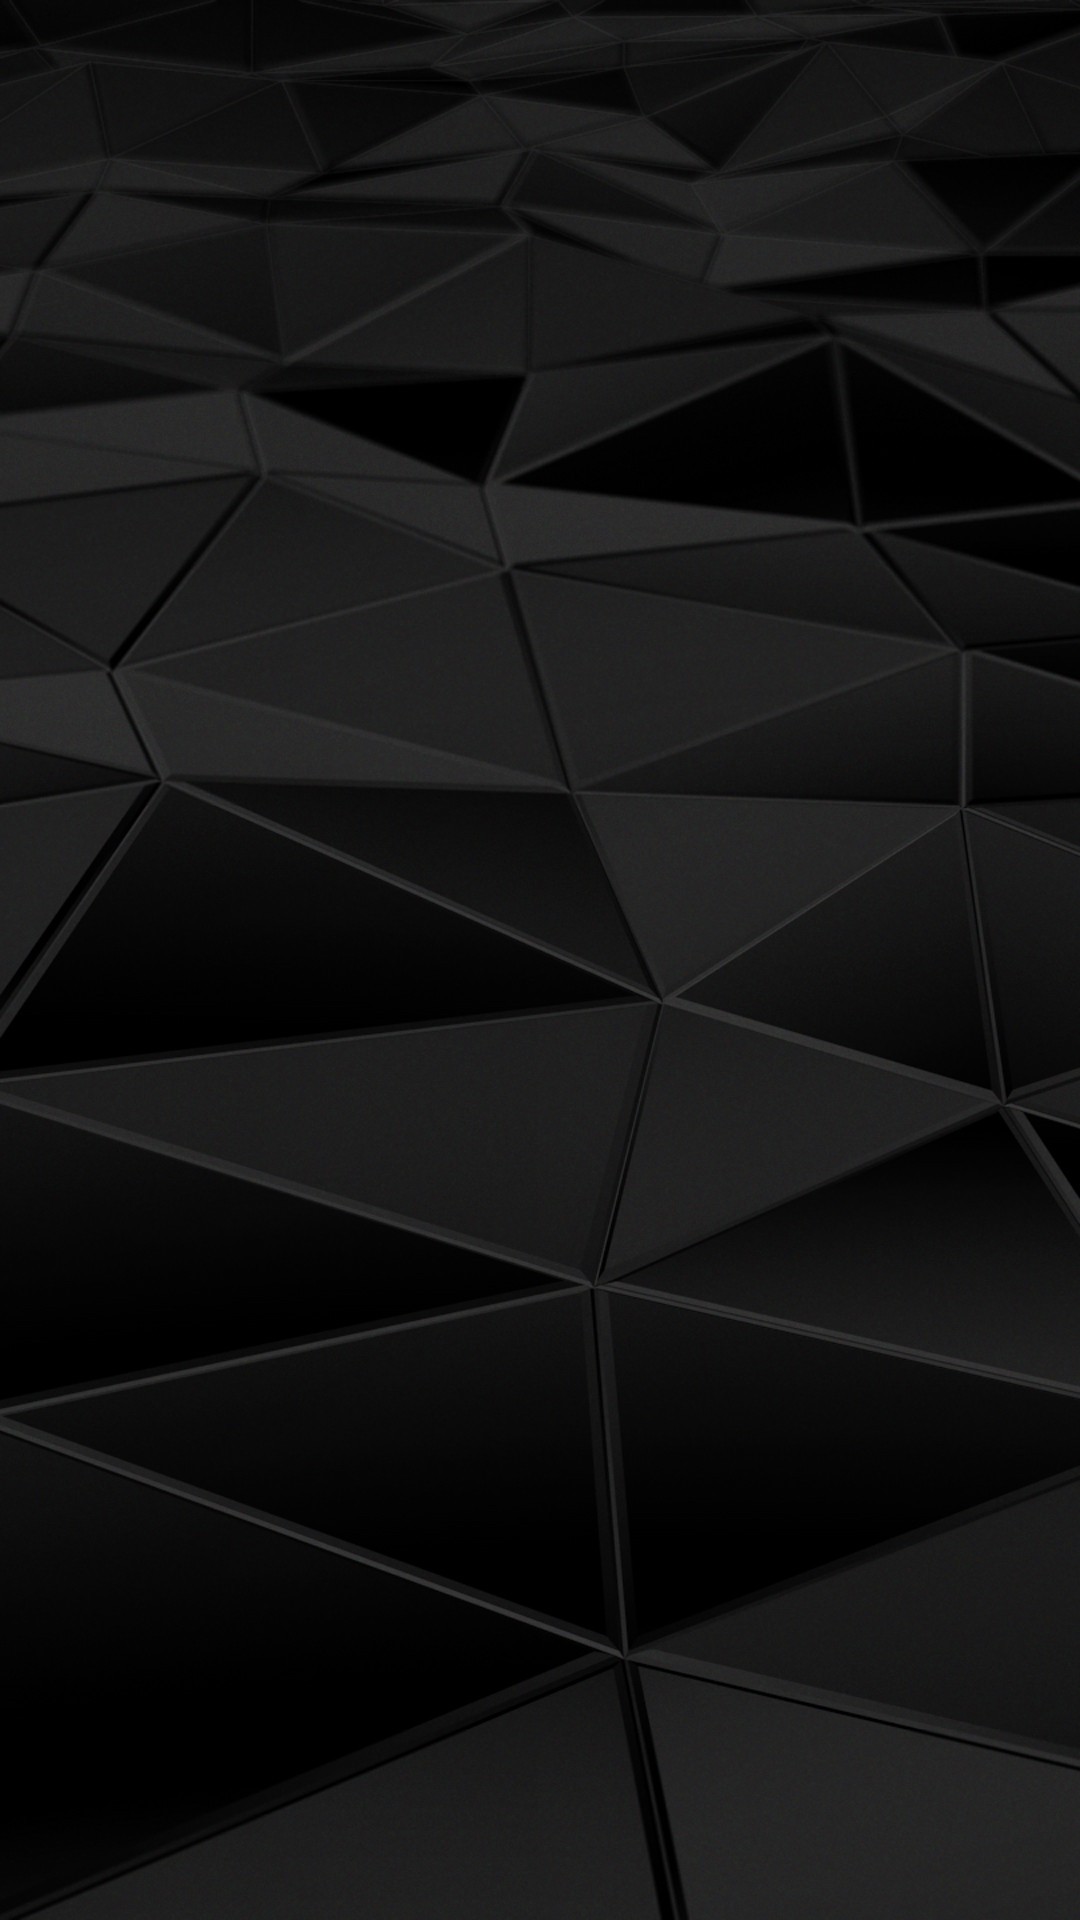 General 1080x1920 texture CGI digital art dark geometry monochrome triangle geometric figures portrait display